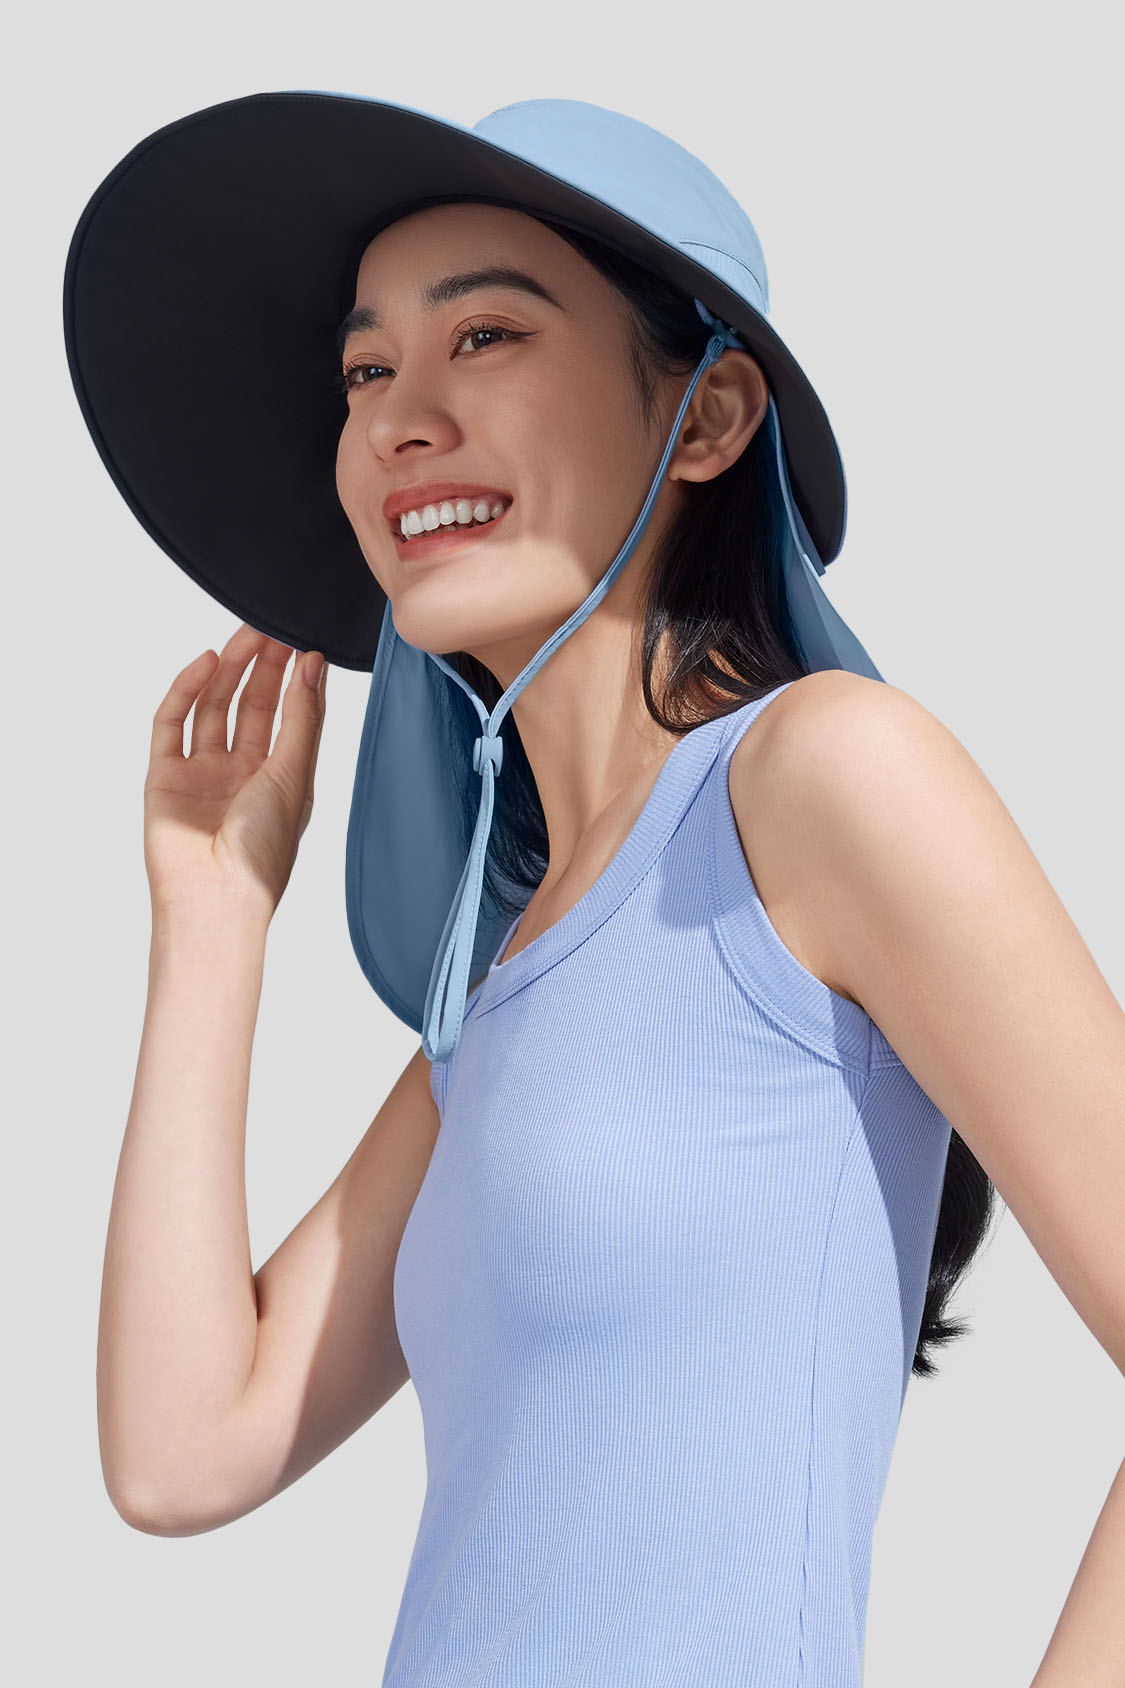 beneunder women's sun hats full coverge #color_blue river gray